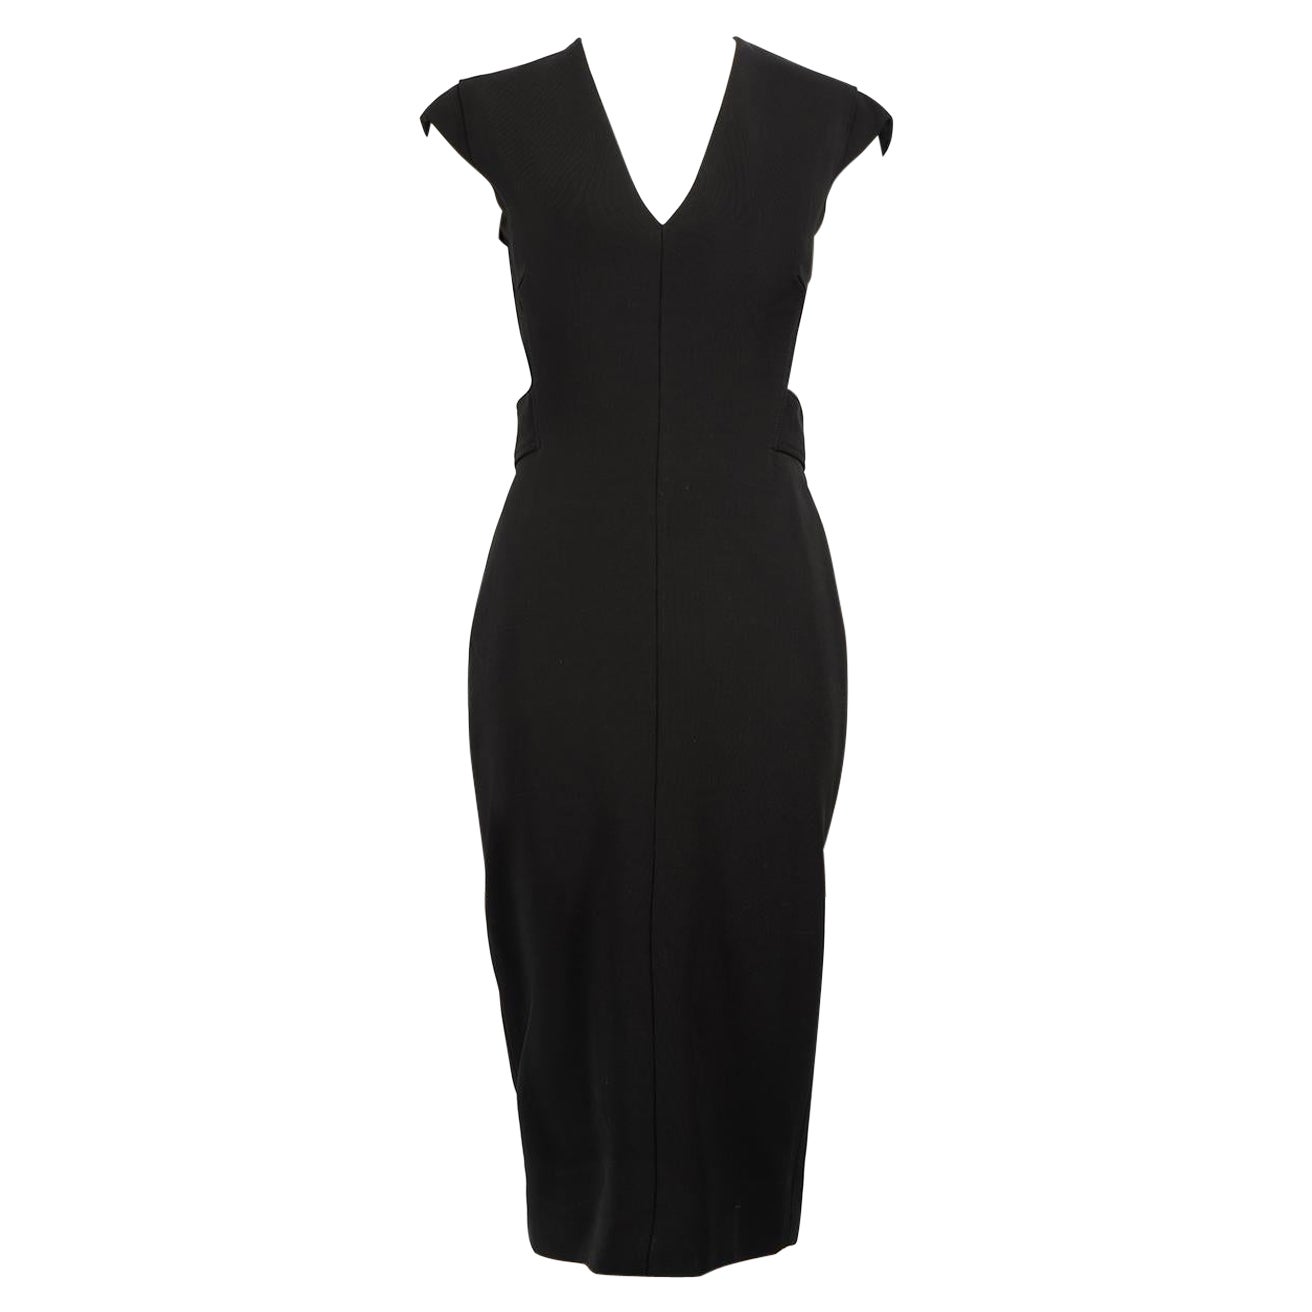 Victoria Beckham Black Open Back Midi Dress Size L For Sale